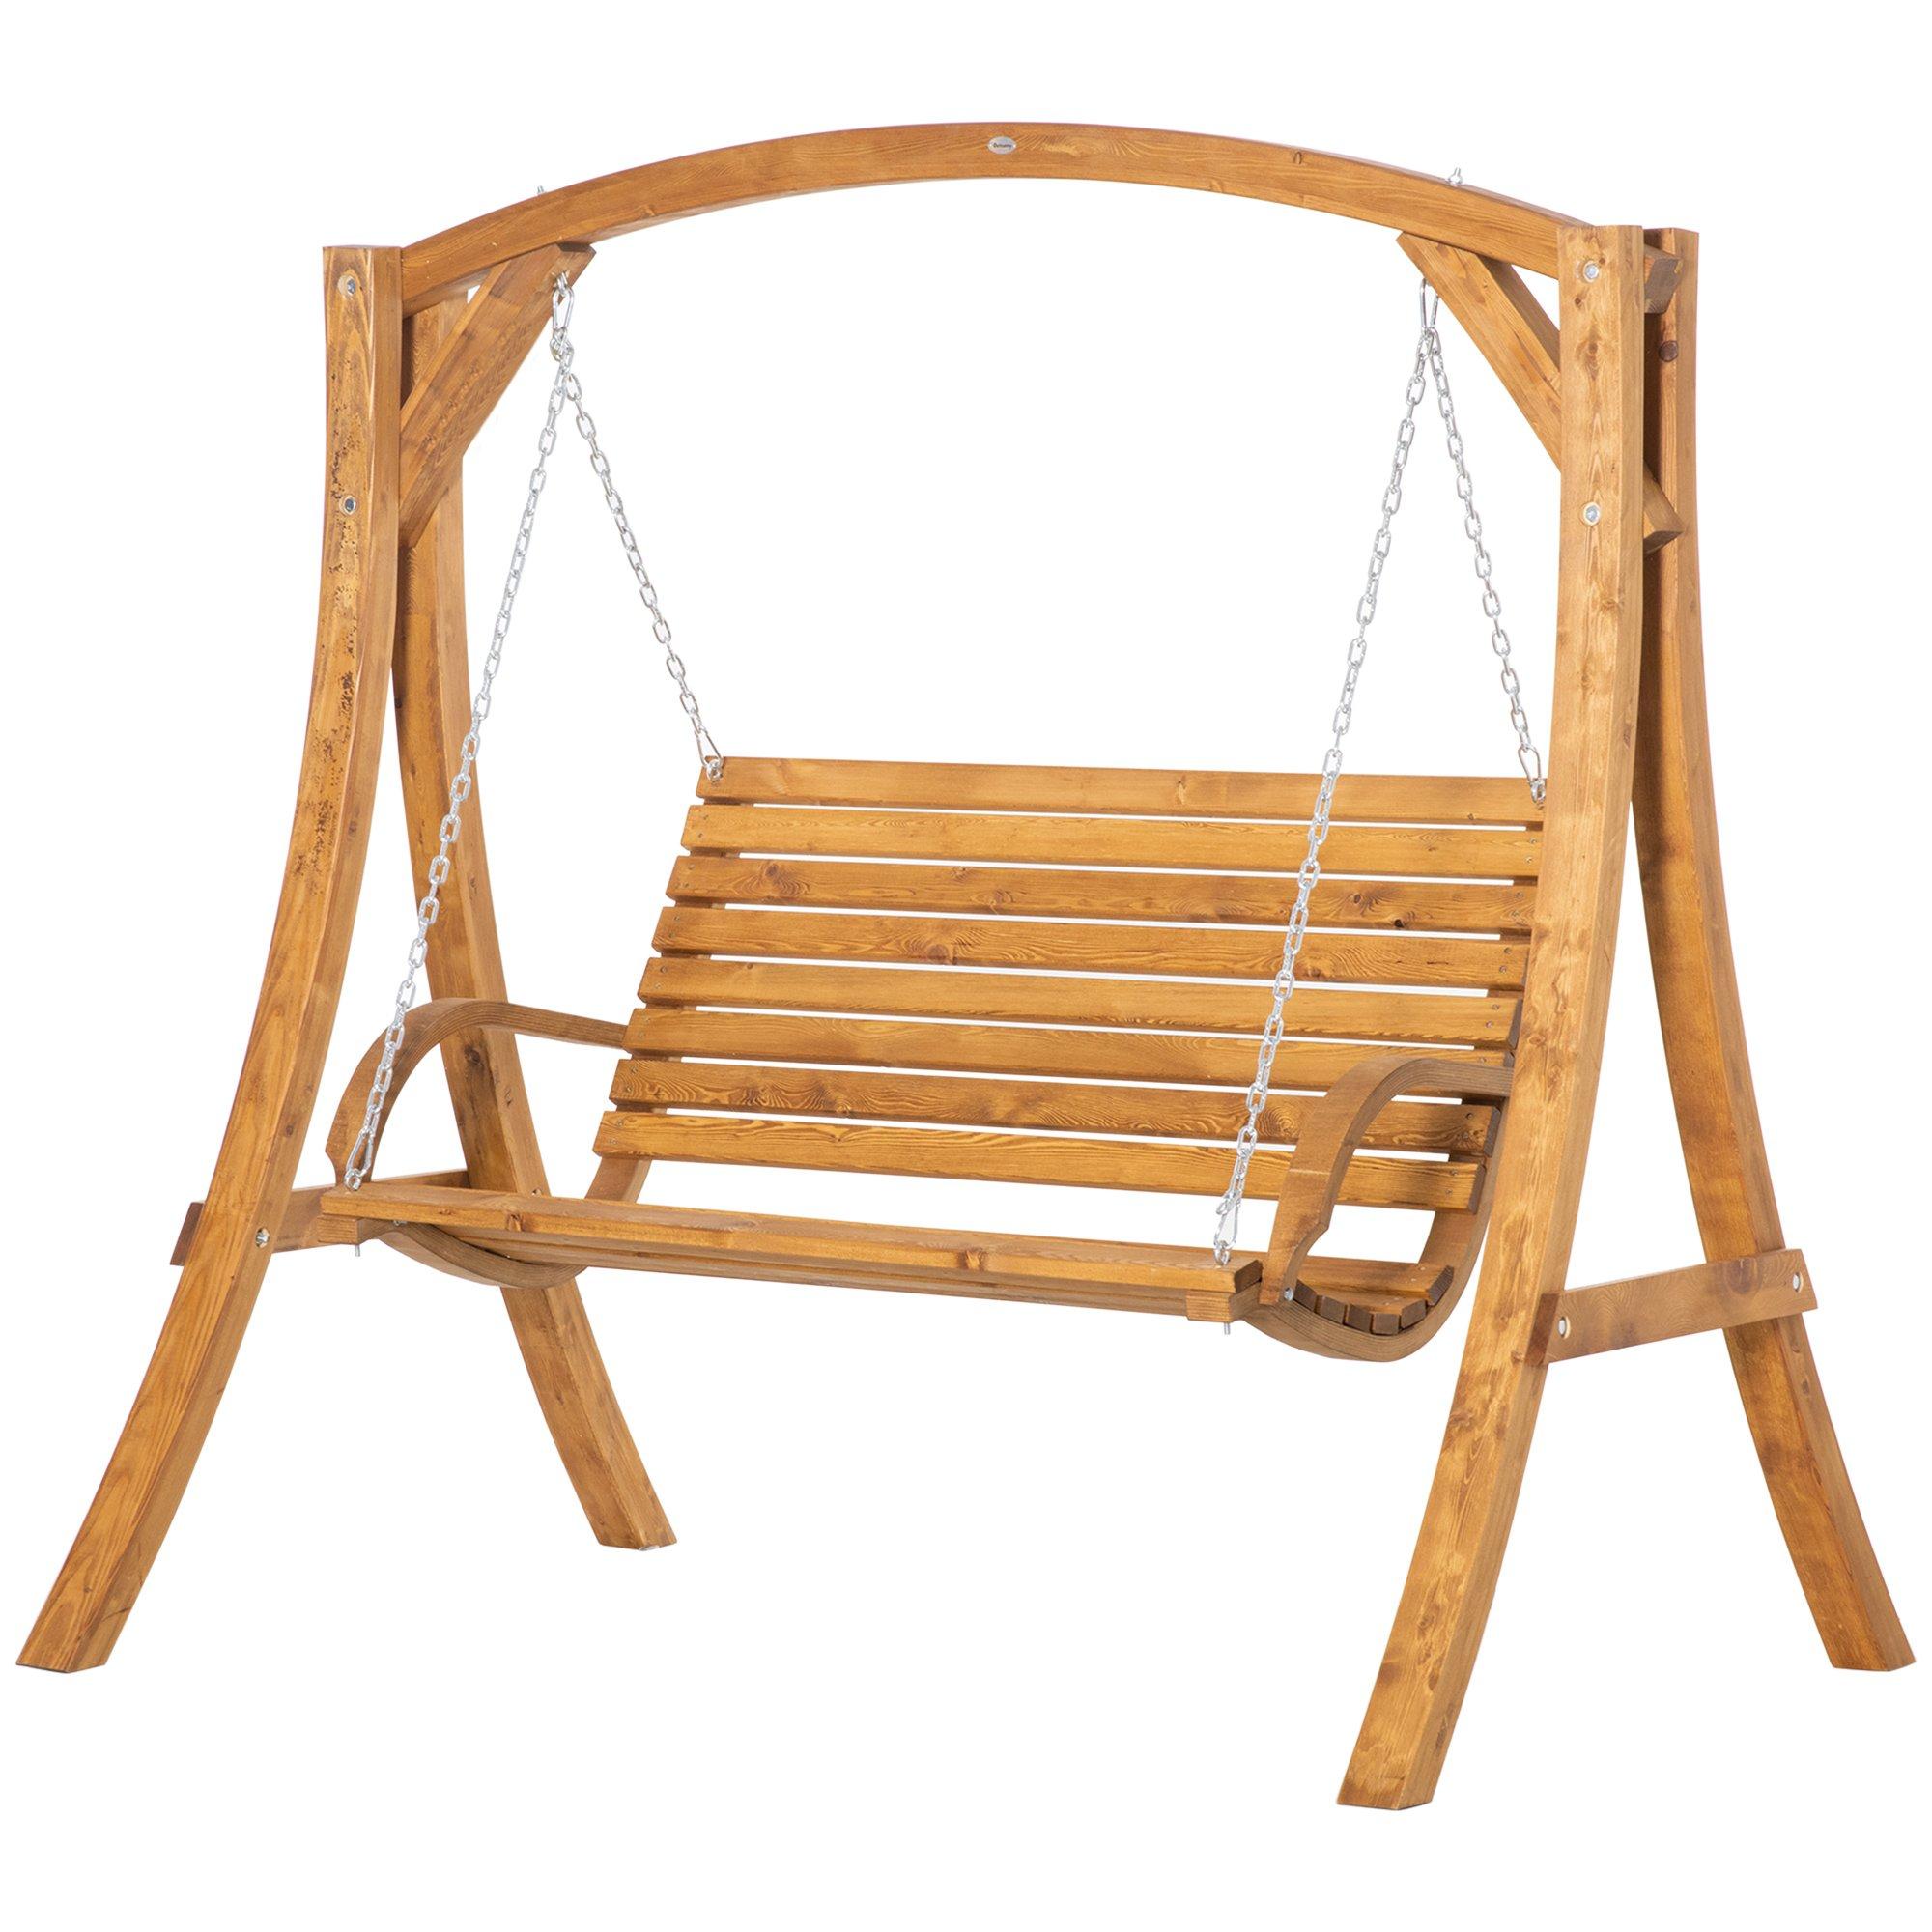 2 Seater Garden Swing Chair, Outdoor Wooden Swing Bench Lounger